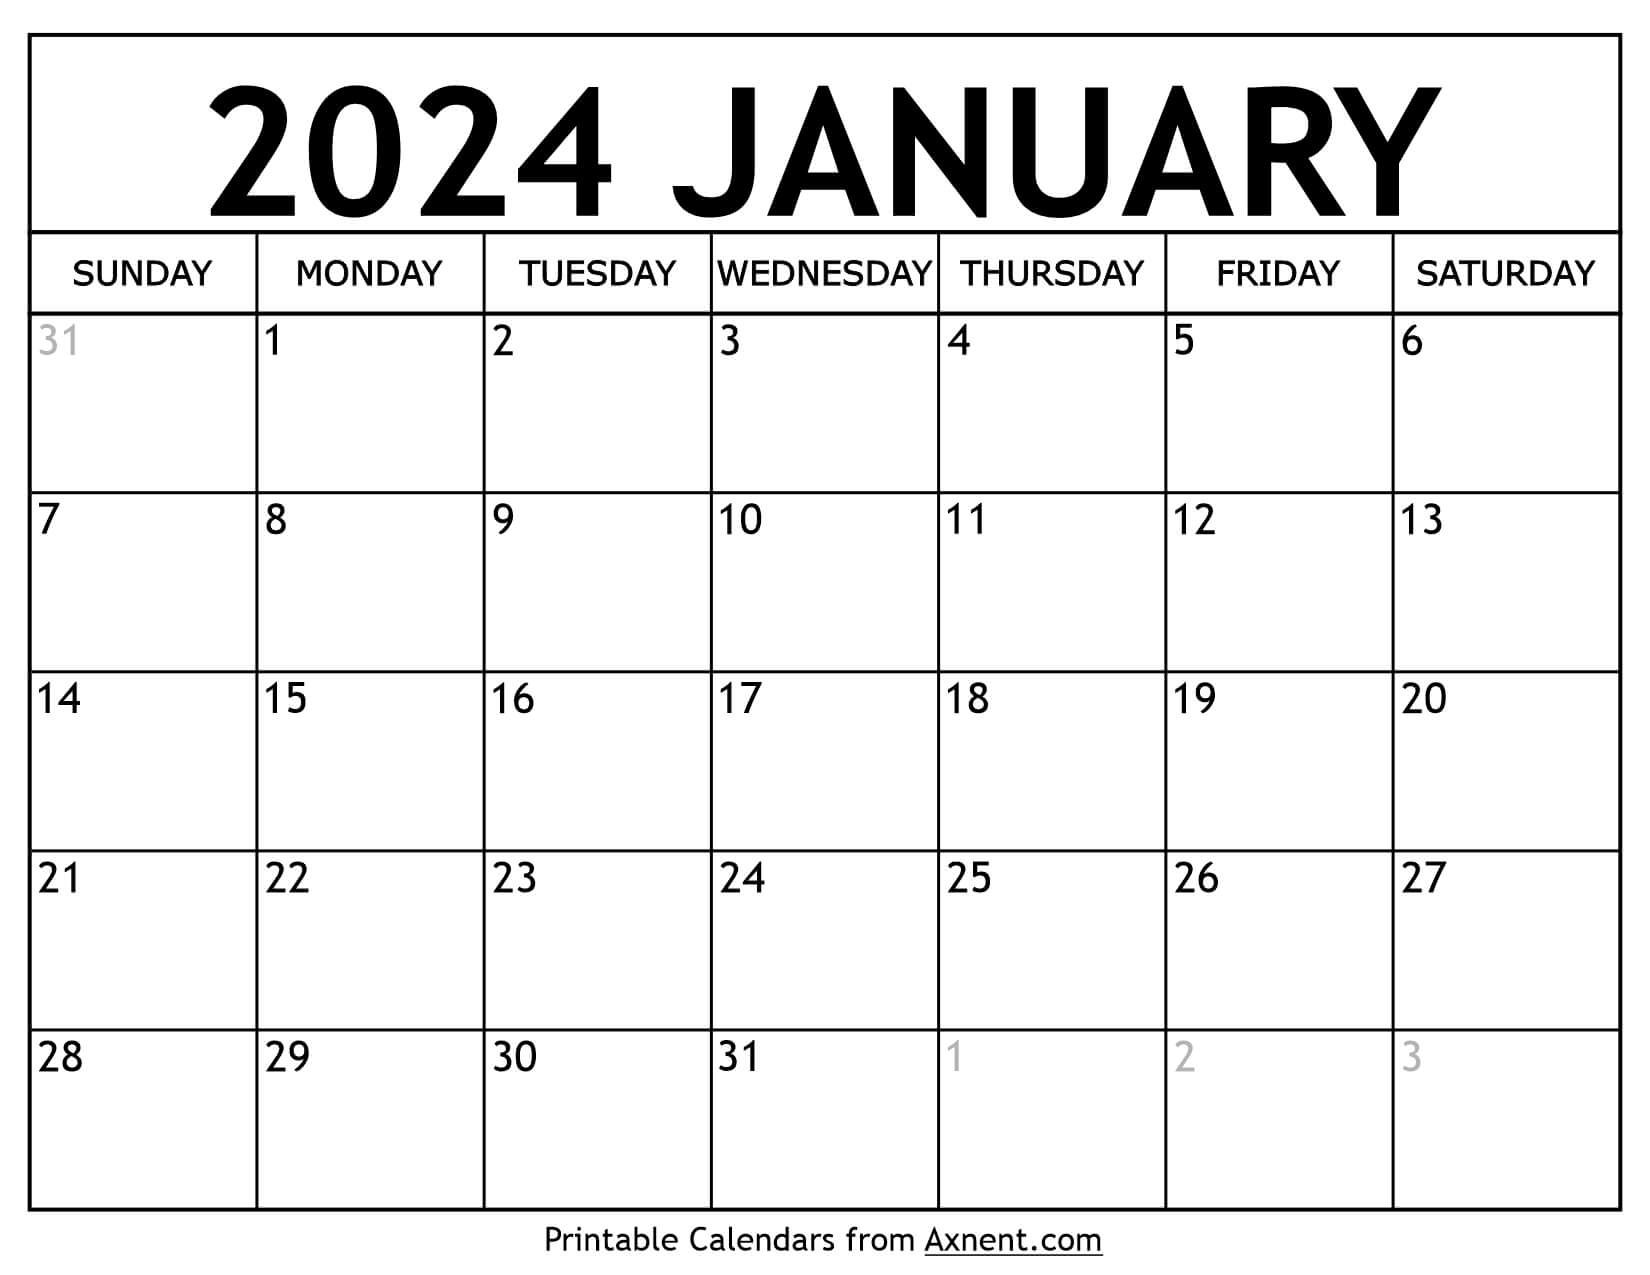 Printable January 2024 Calendar Template - Print Now for Blank Monthly Calendar Printable January 2024